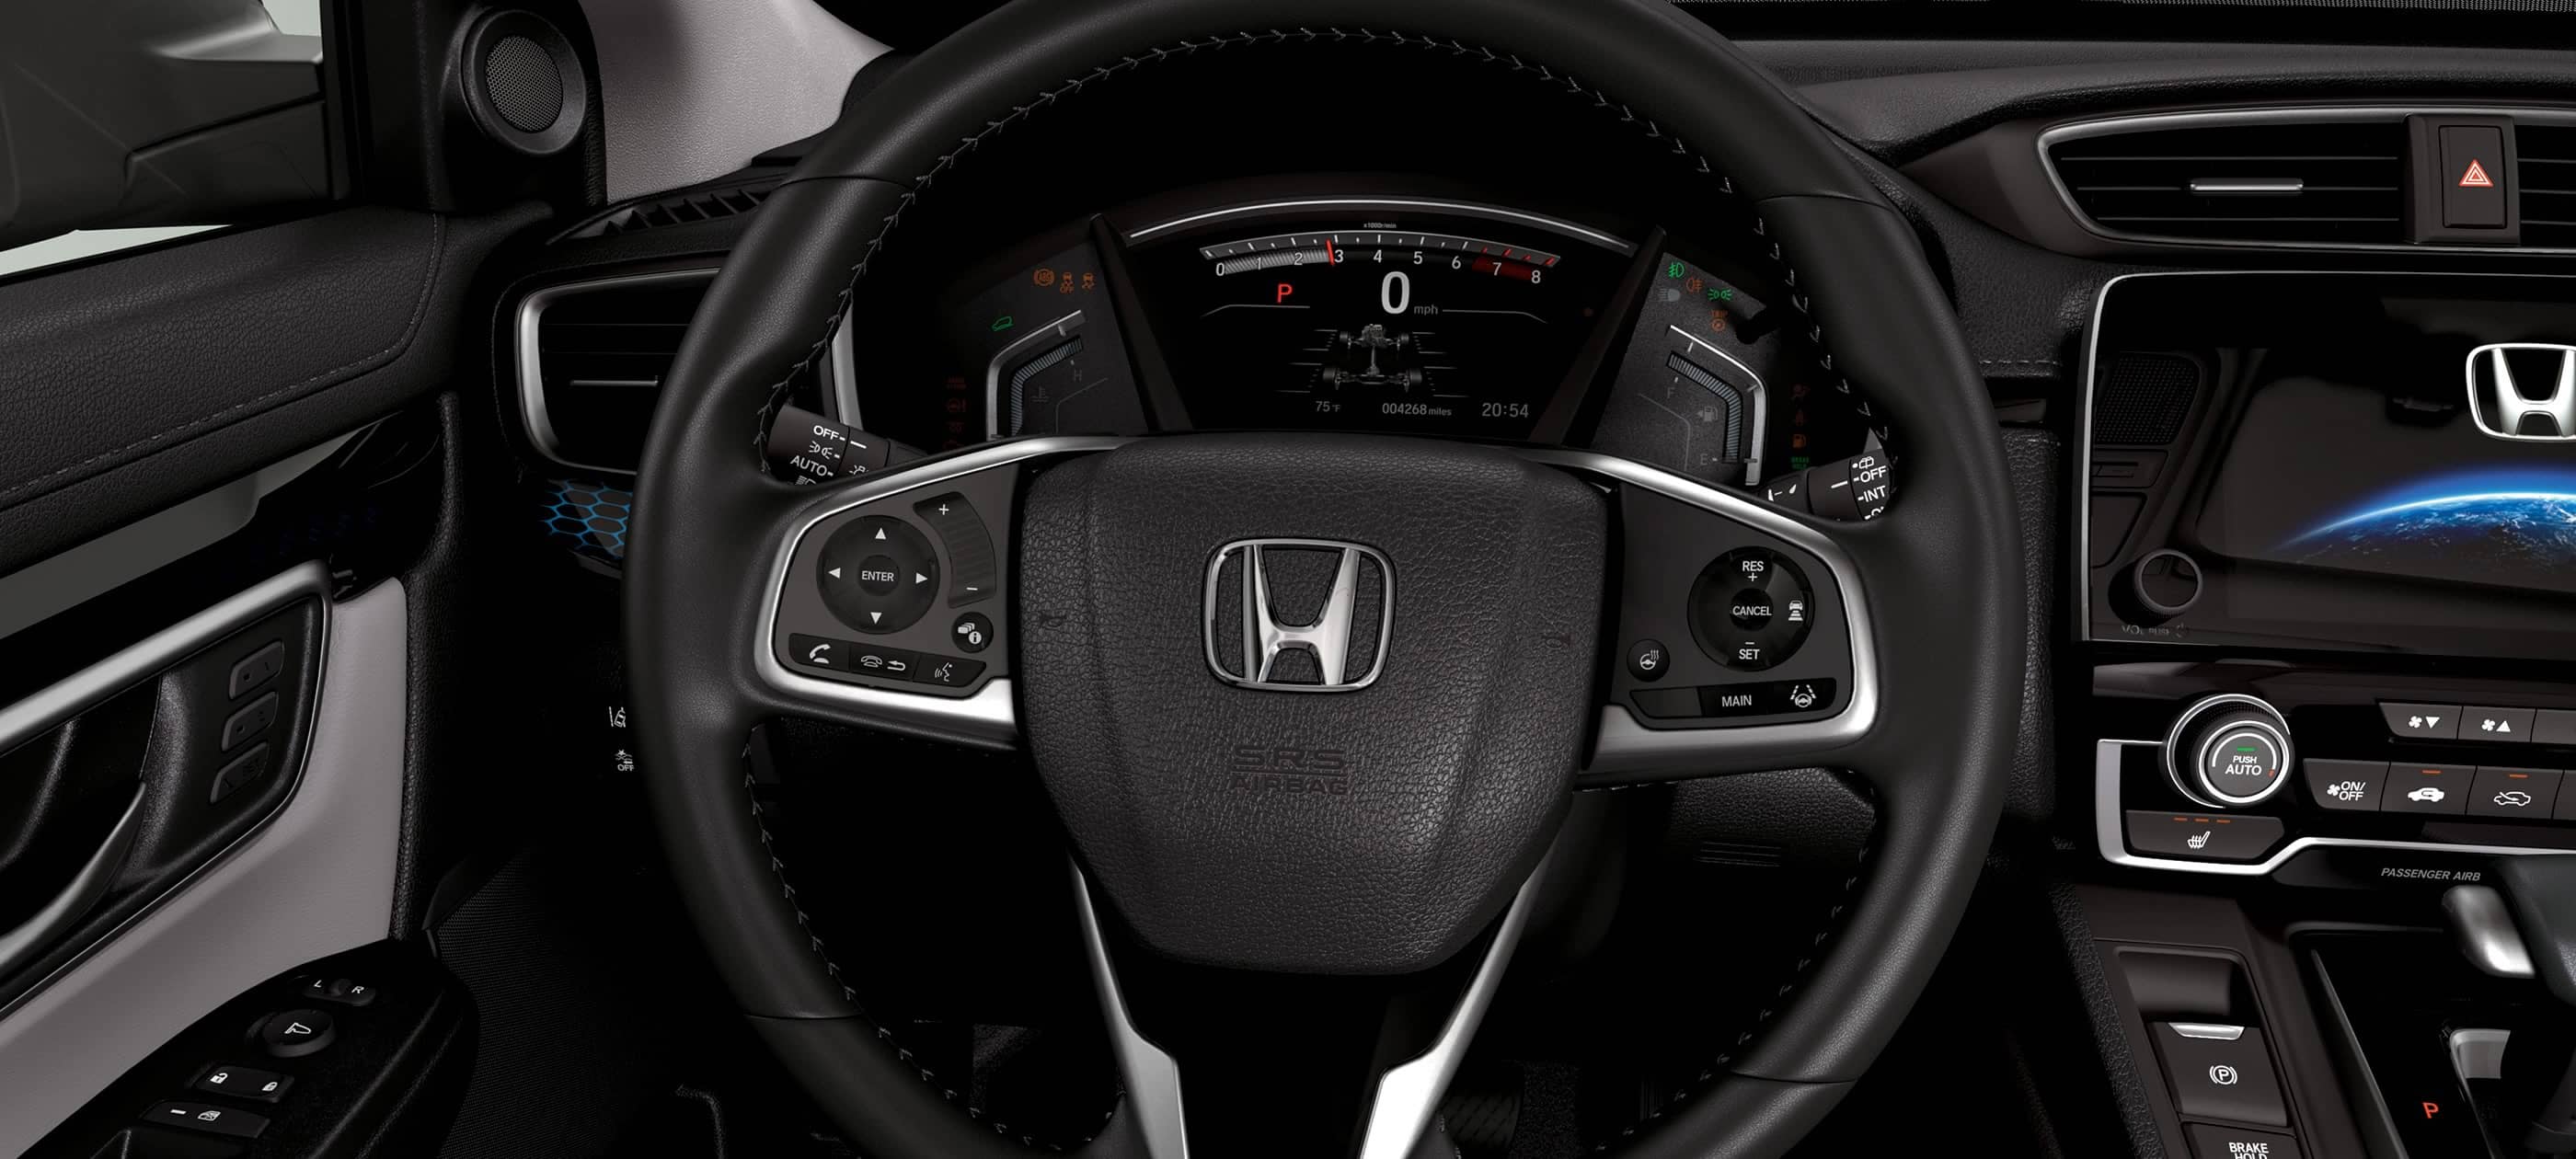 Denver Honda CR-V Service & Accessories | Mile High Honda